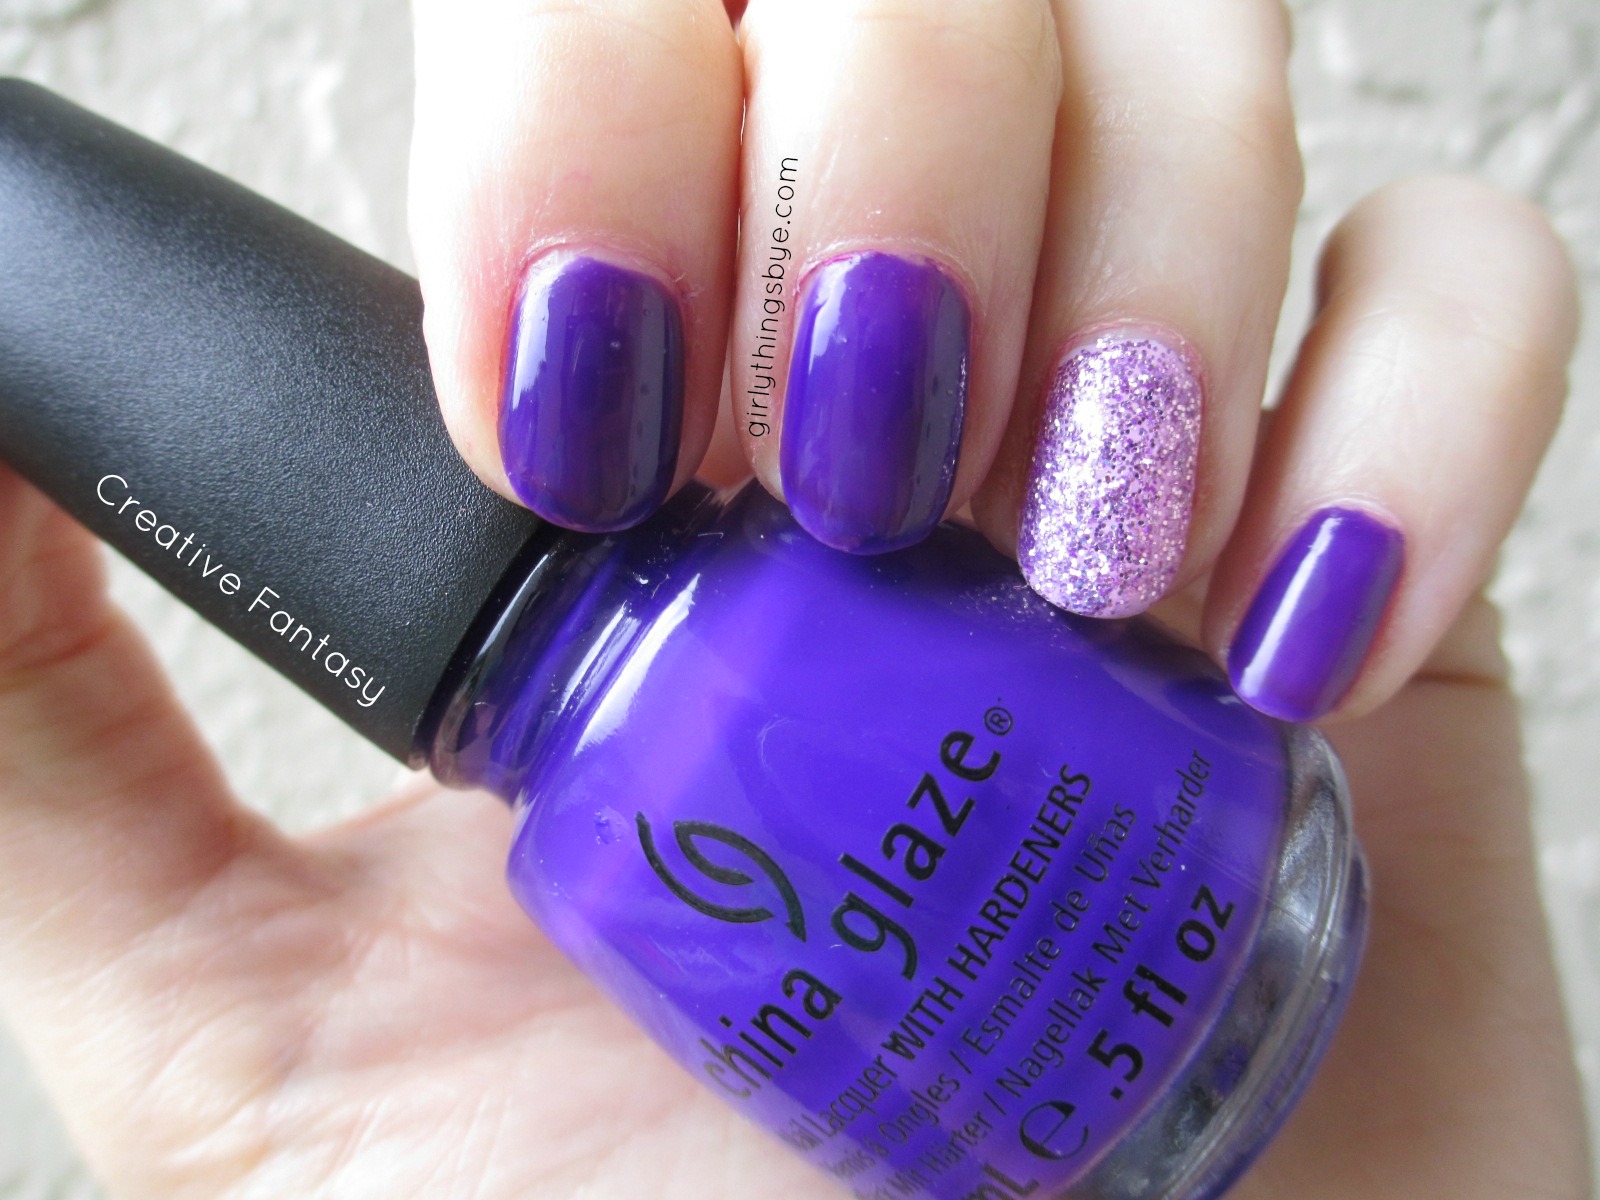 Purple Glaze Ultimate Polish